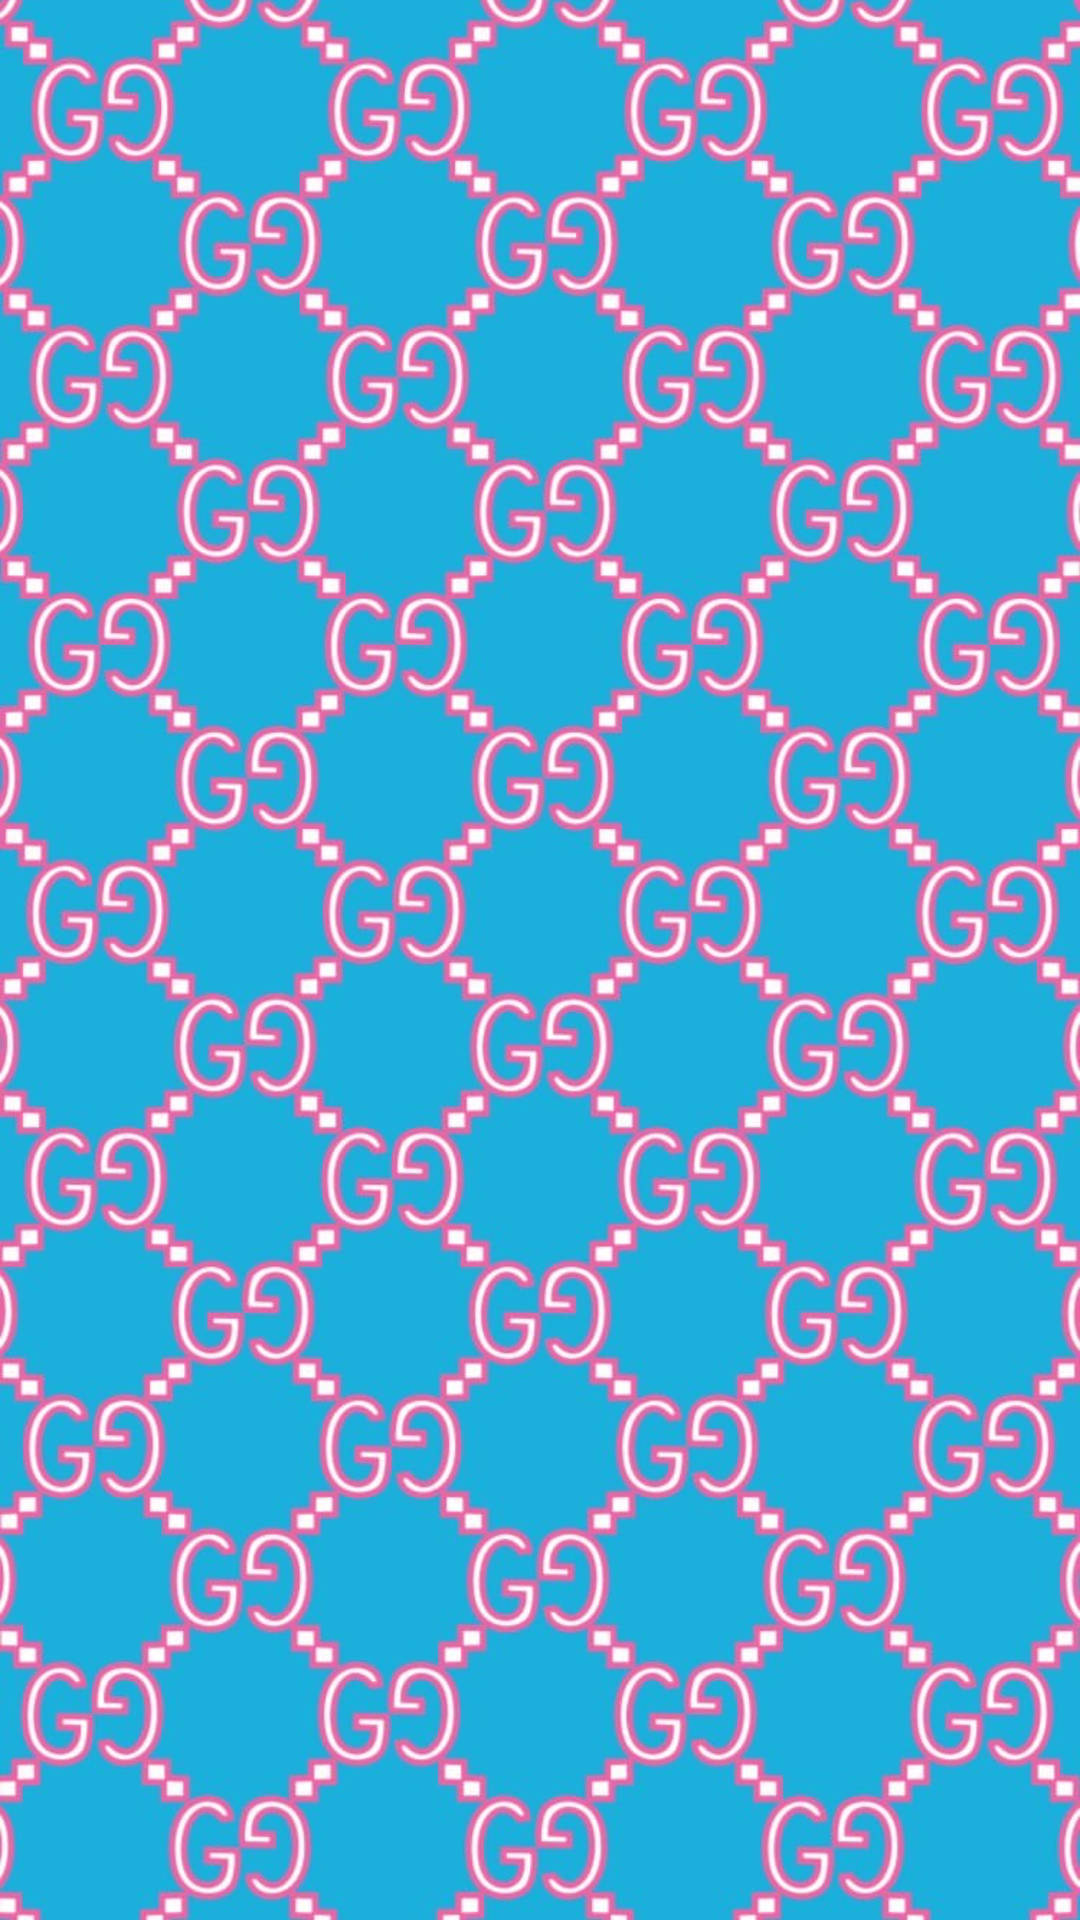 Dochter Verwarren Smerig Download Blue And Pink Gucci Pattern Wallpaper | Wallpapers.com